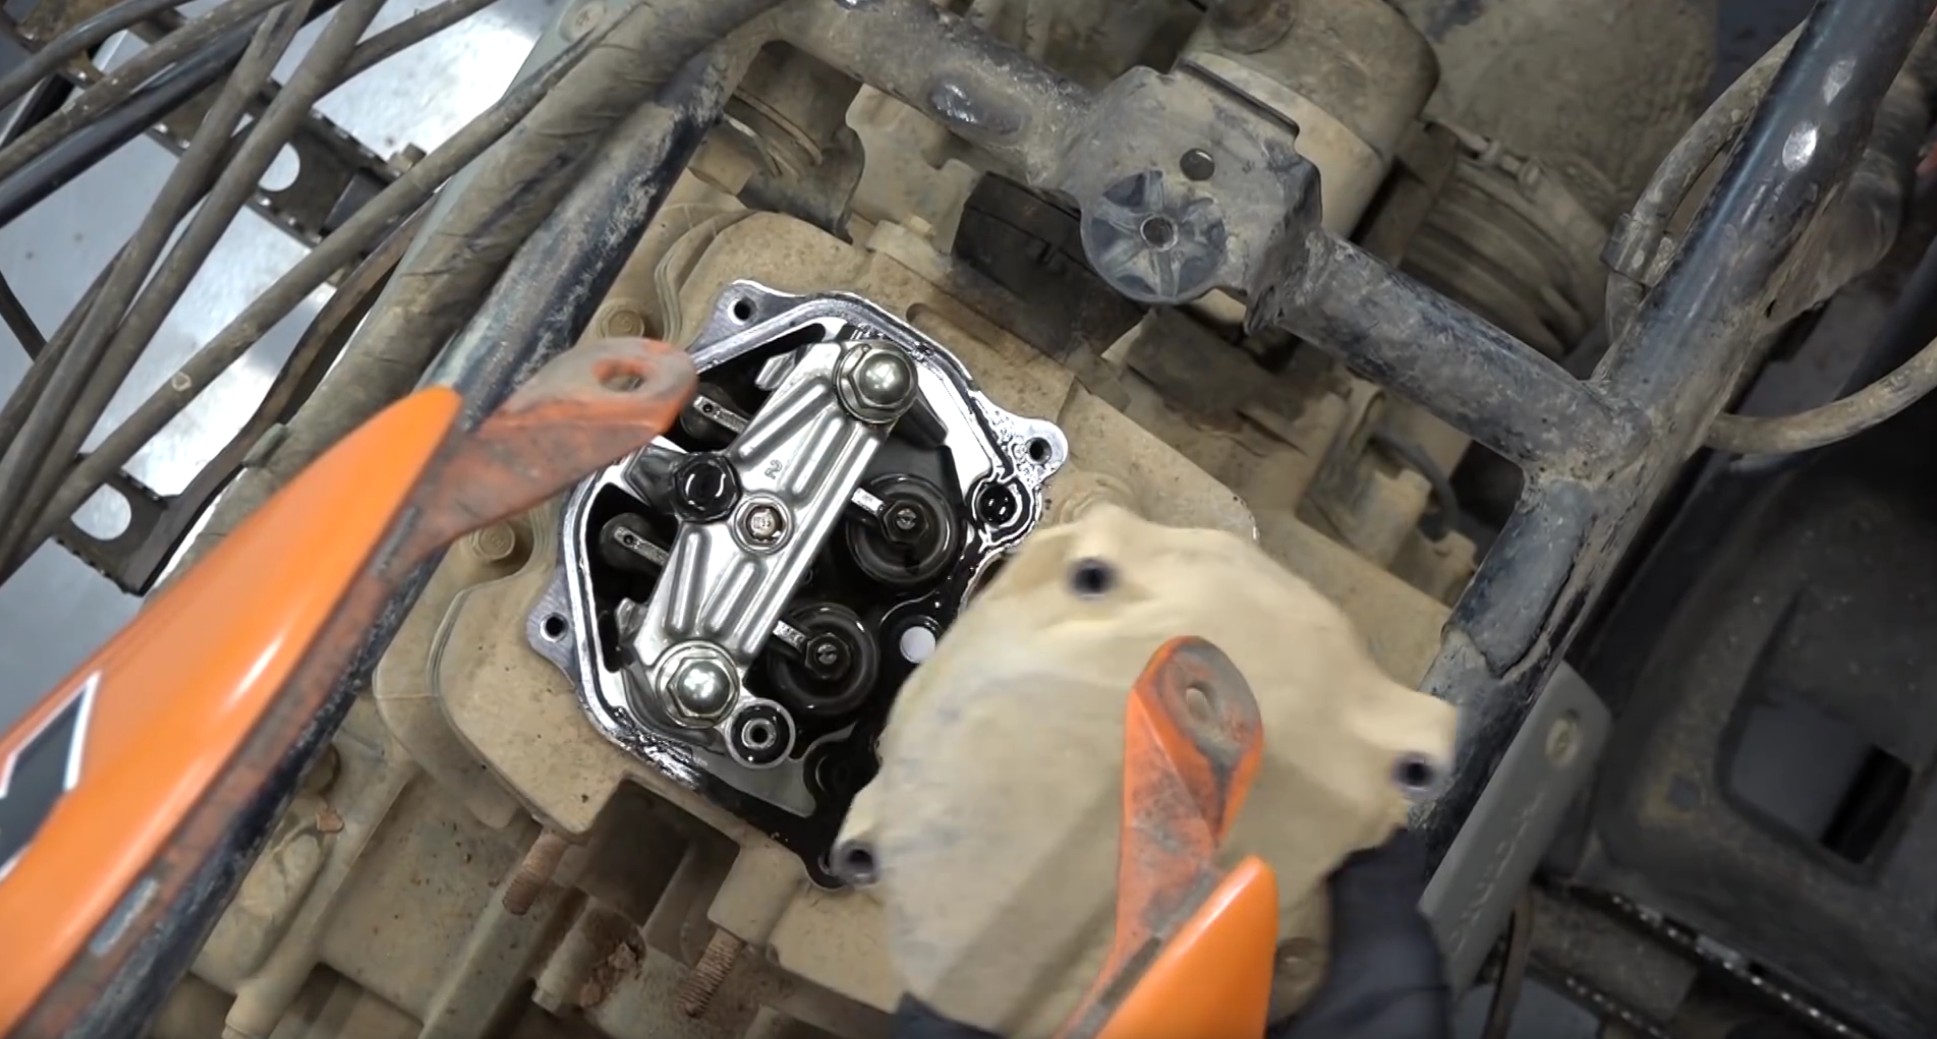 Honda TRX350 Rancher engine teardown